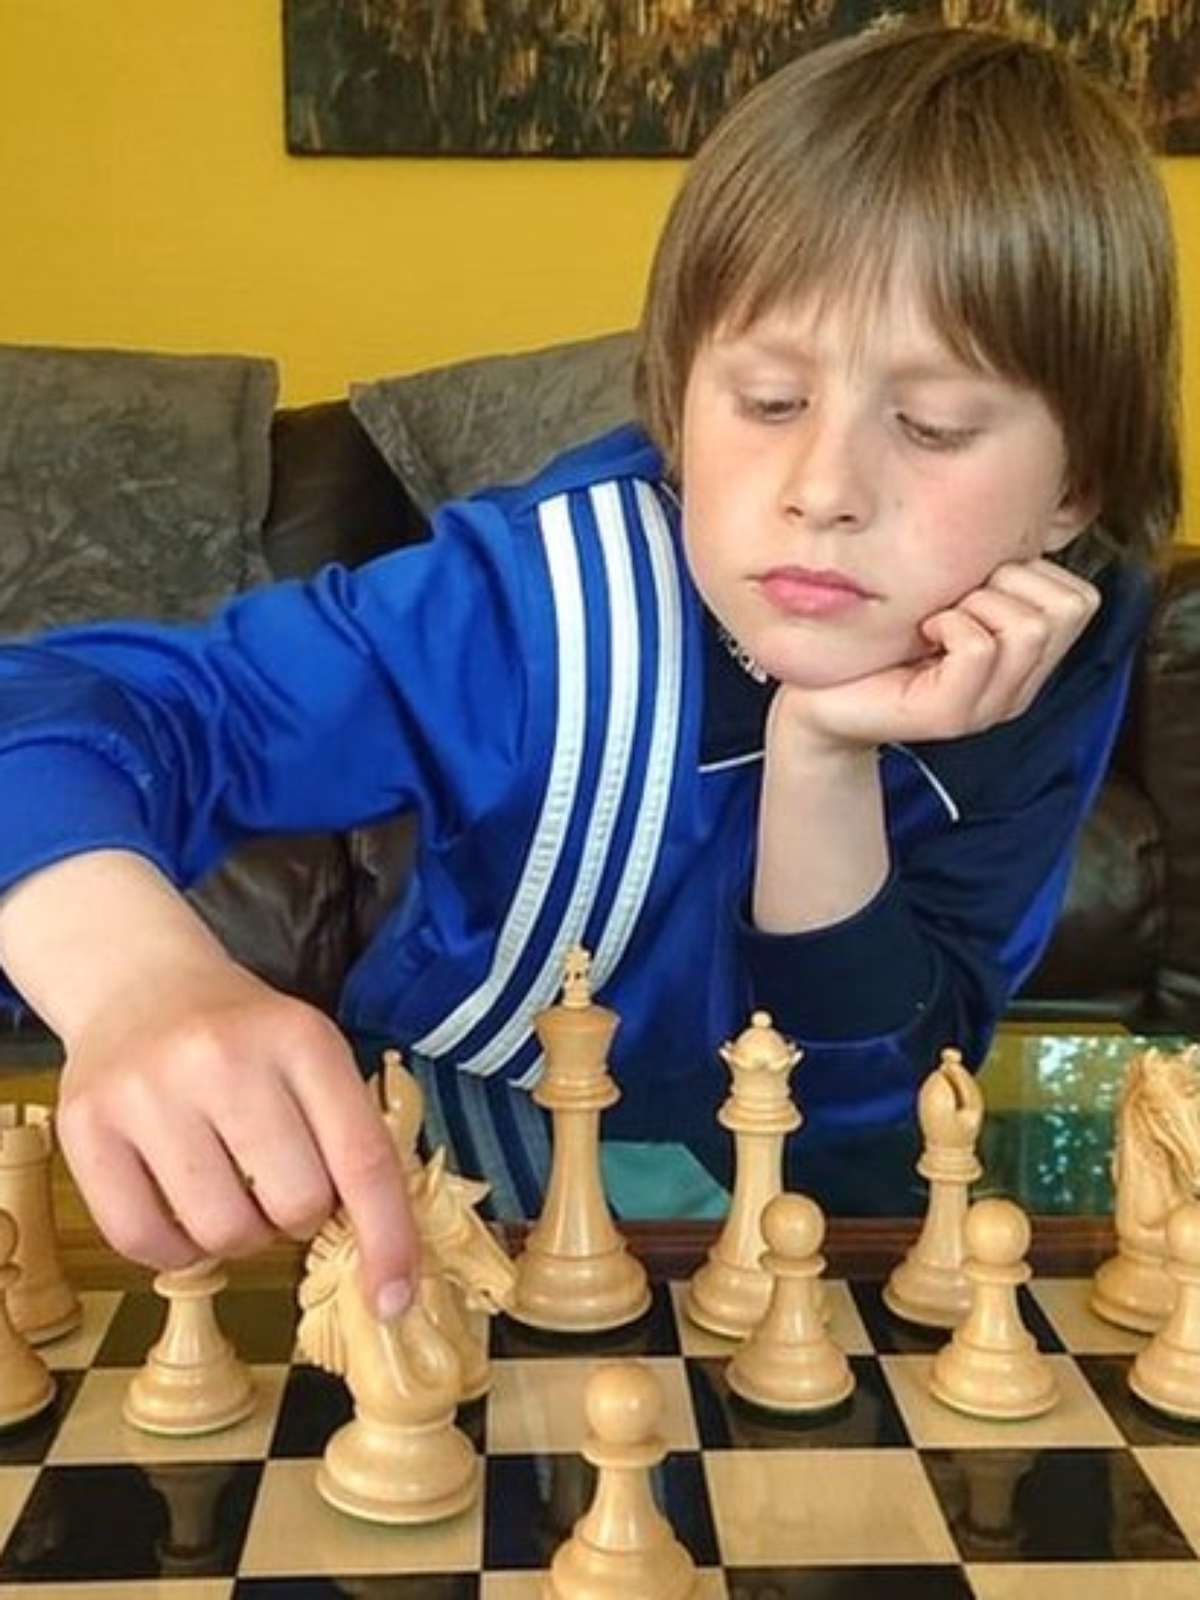 Aposentado já ensinou xadrez a 5.000 pessoas